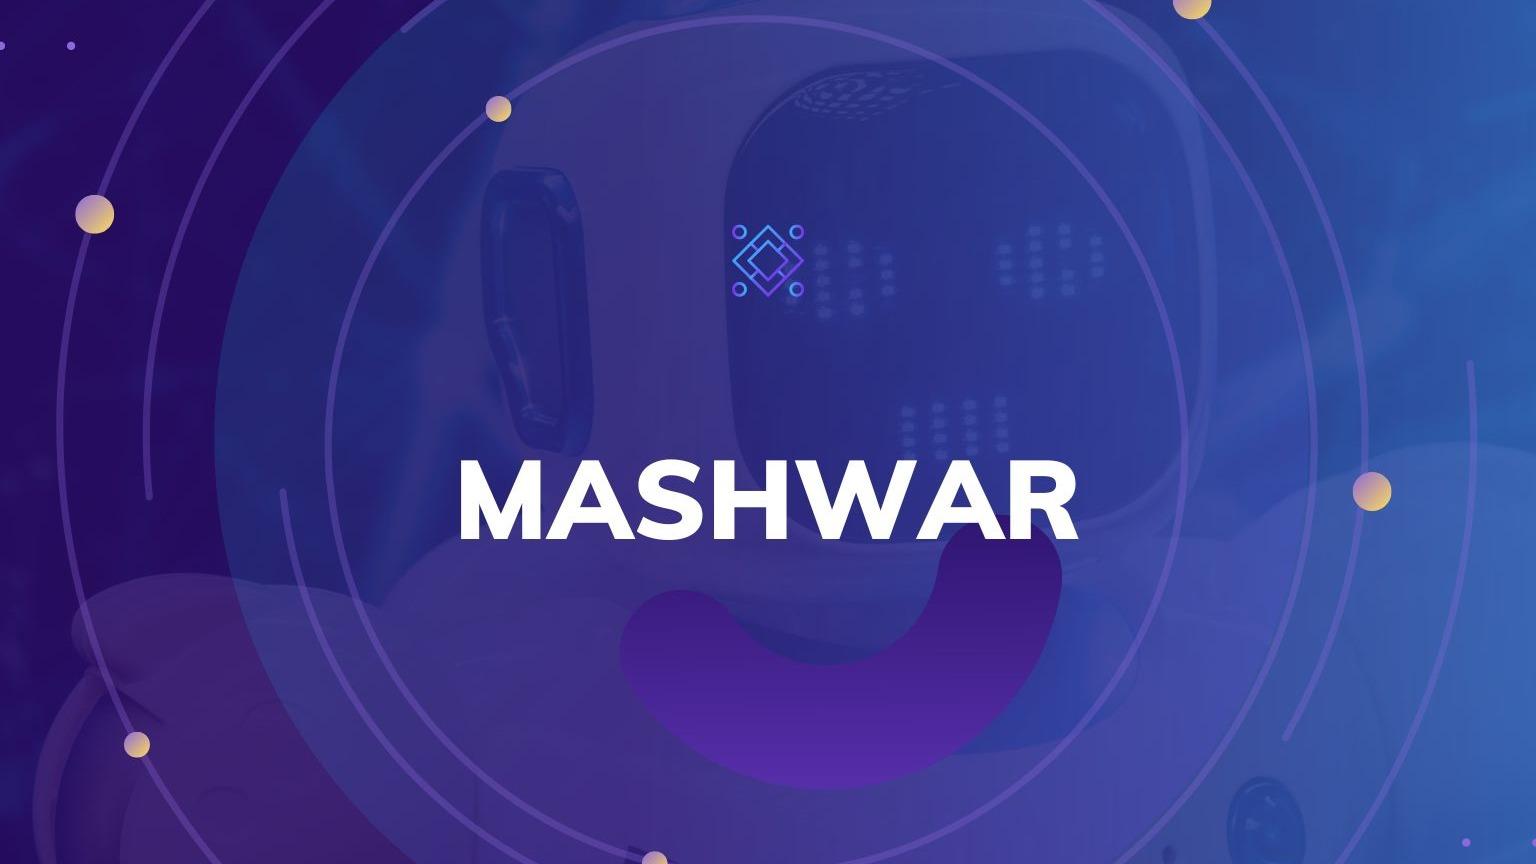 Mashwar